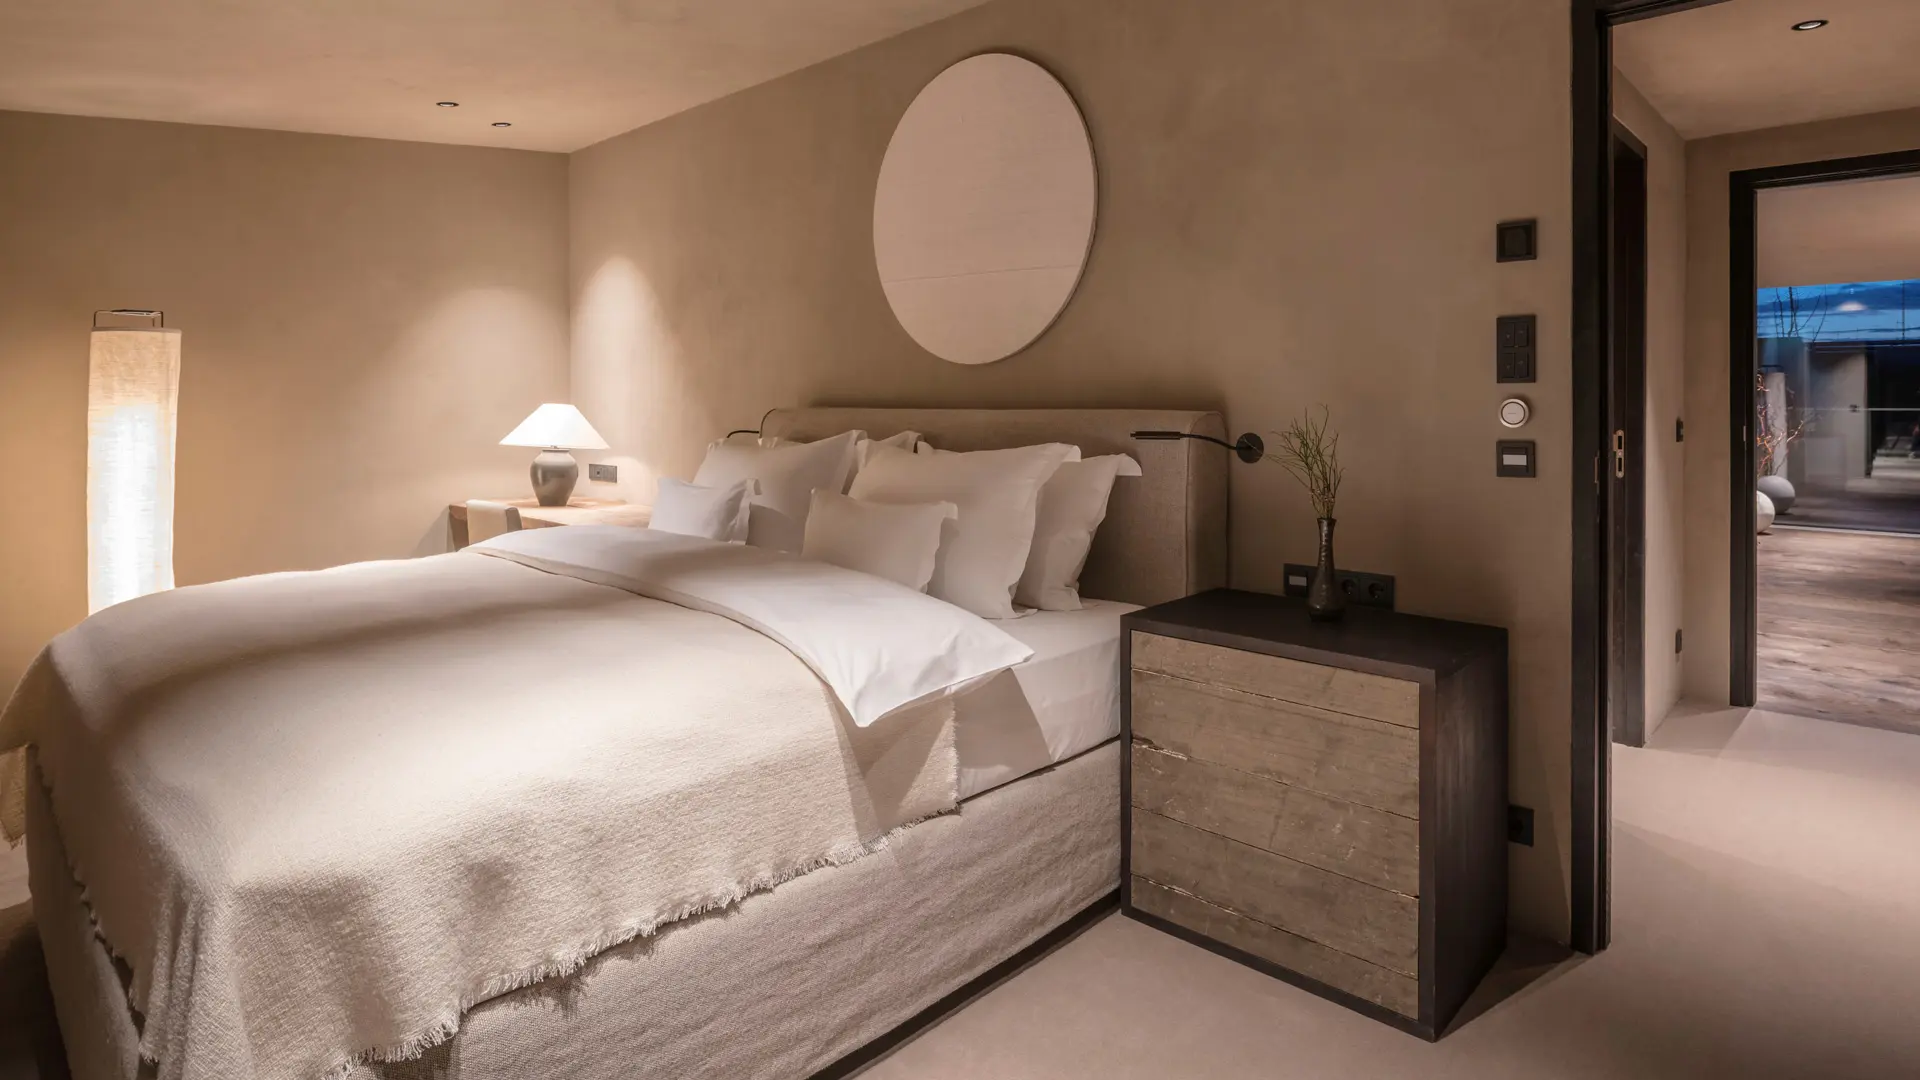 Hotel review Accommodation' - Bayerischer Hof - 0